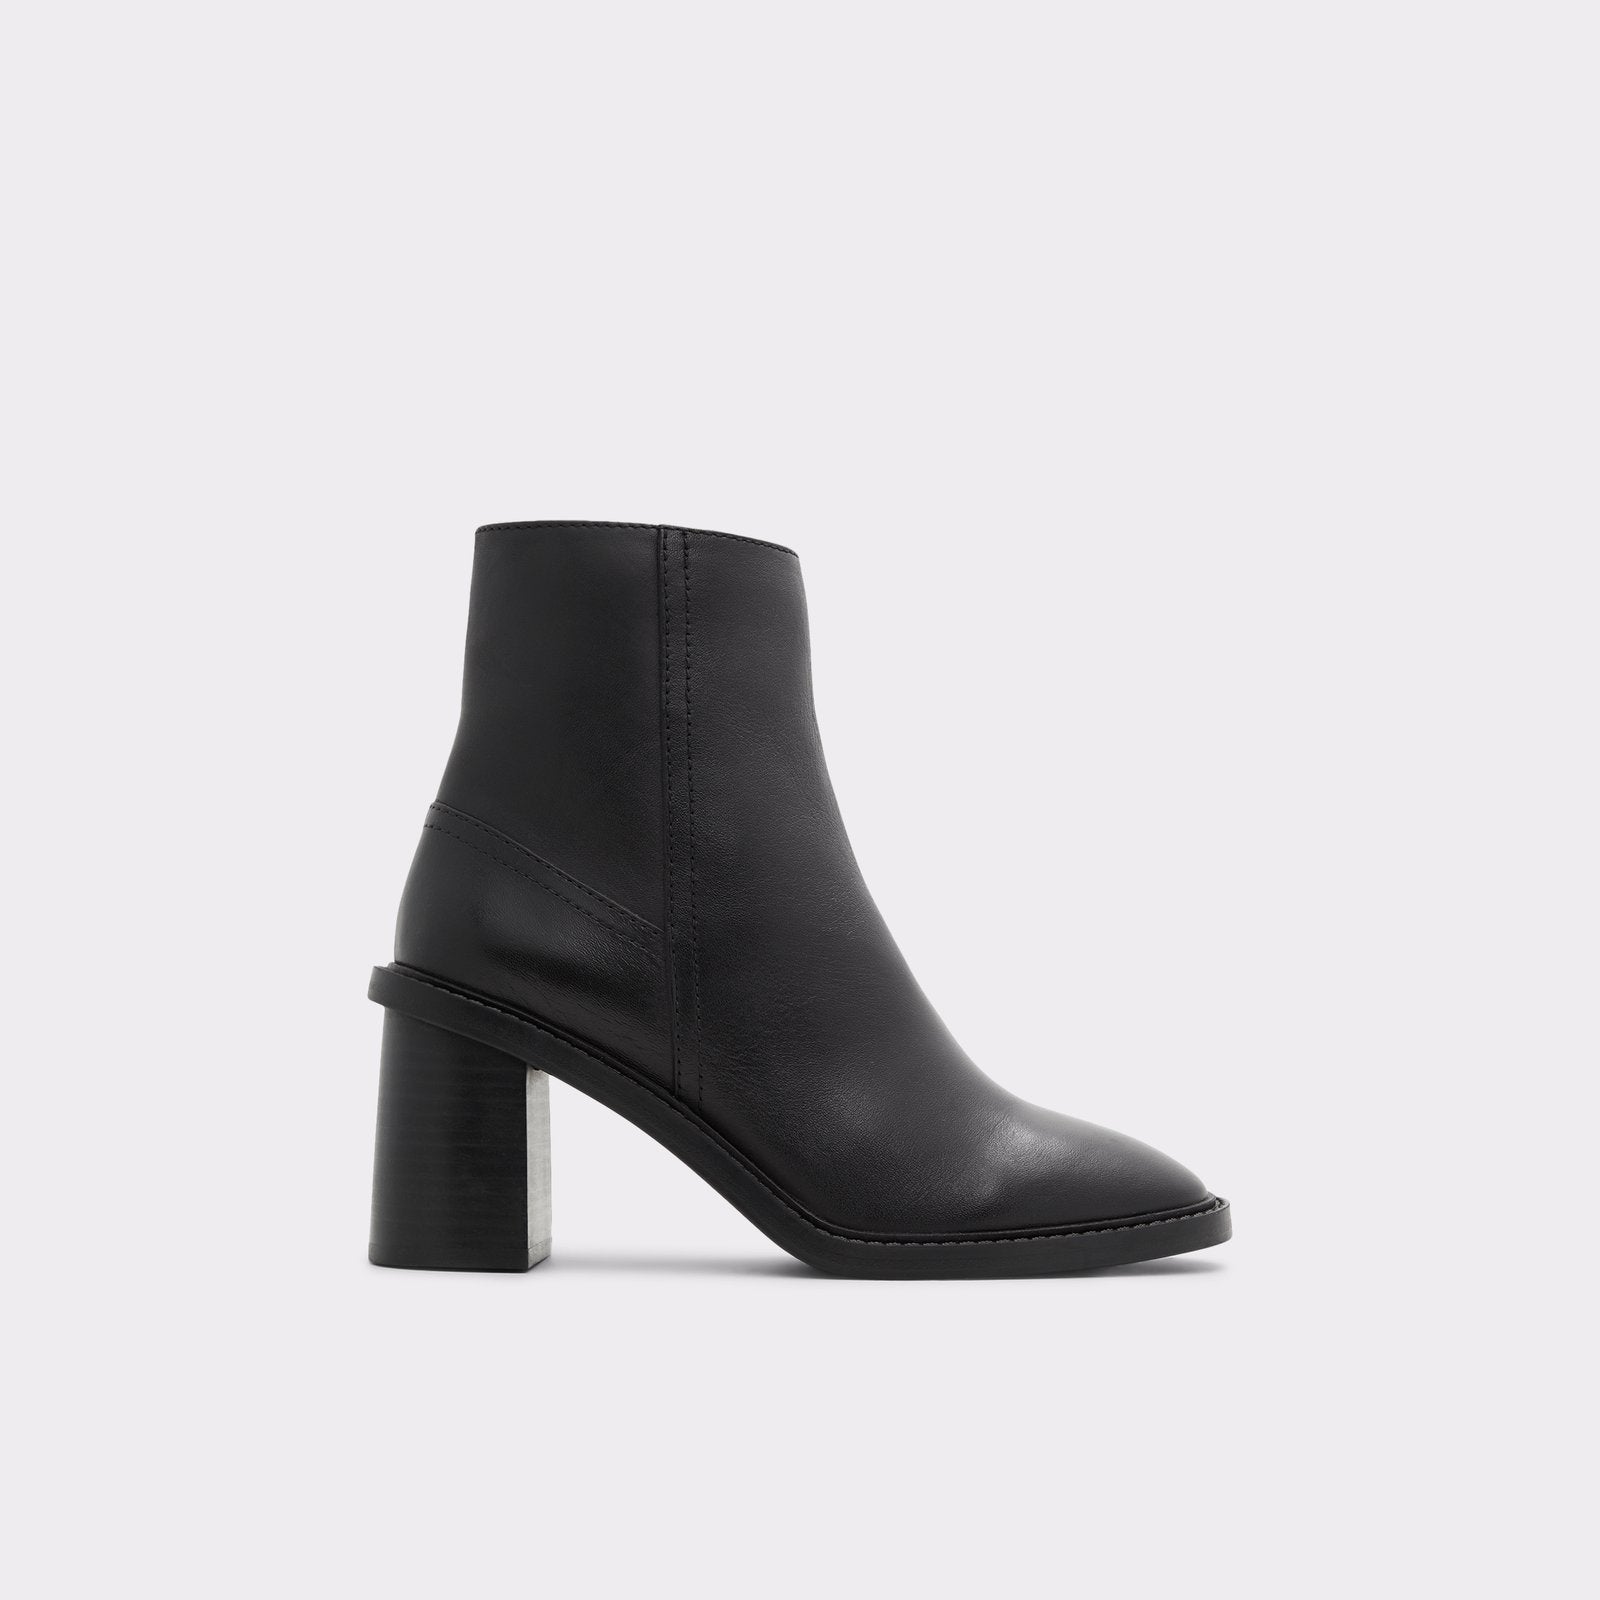 Aldo Women’s Ankle Boots Filly (Black)